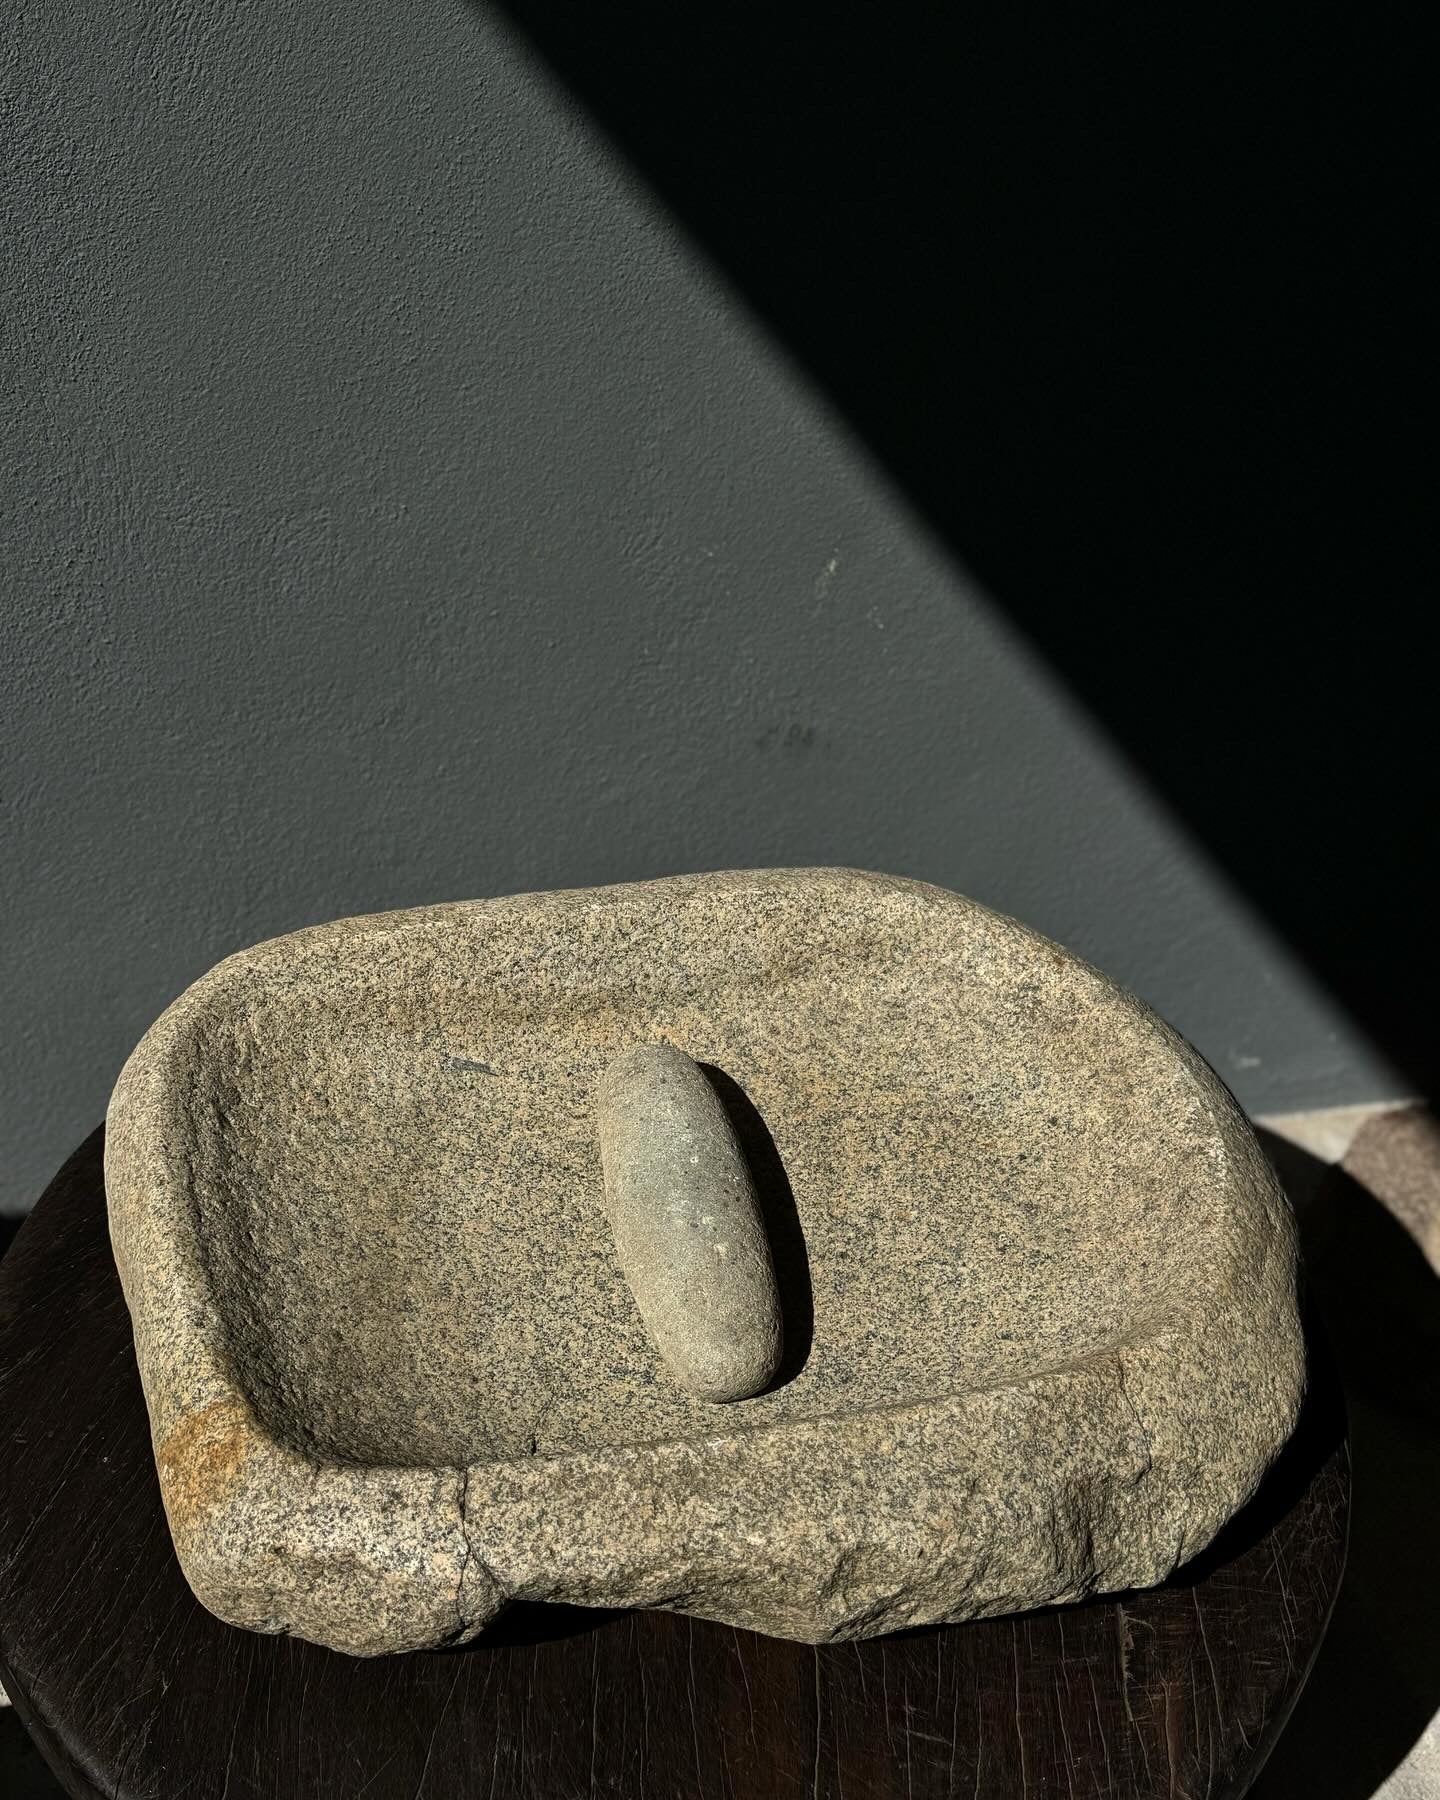 River Stone Mortar From Oaxaca, 18th Century/ Metate Antiguo De Oaxaca